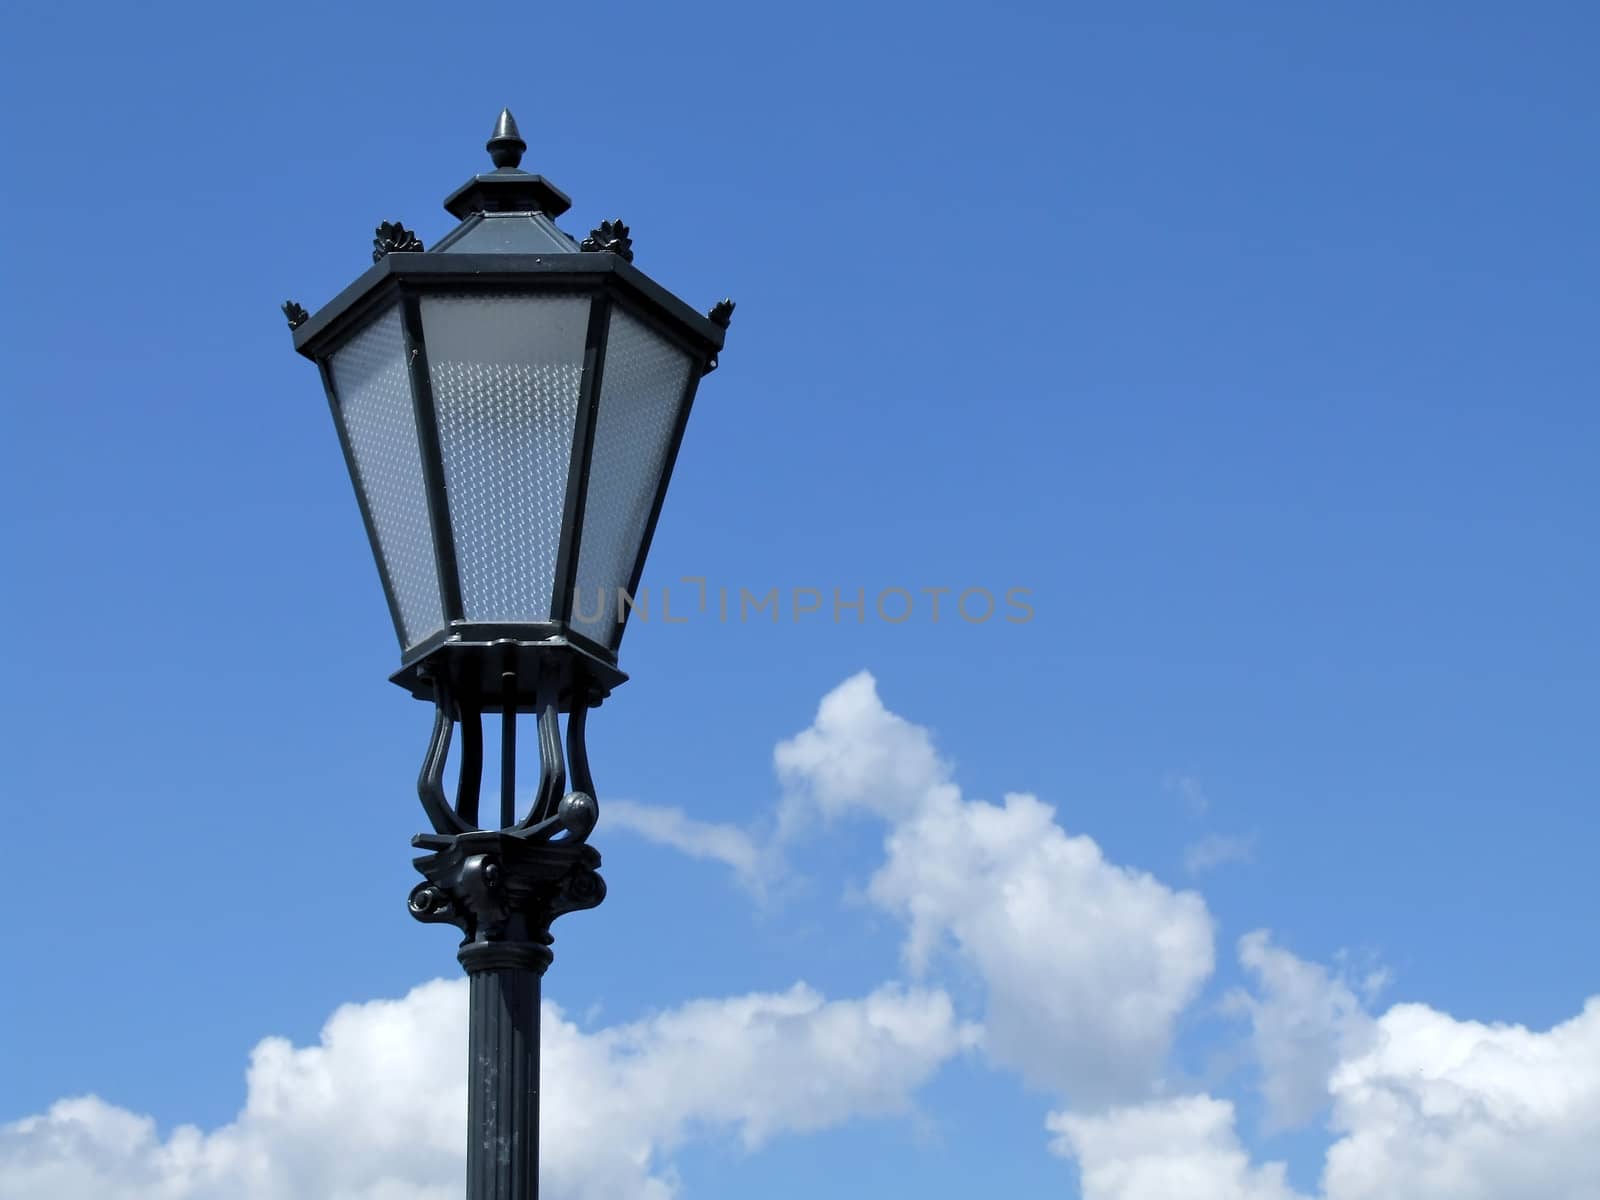 the street lamp on the street